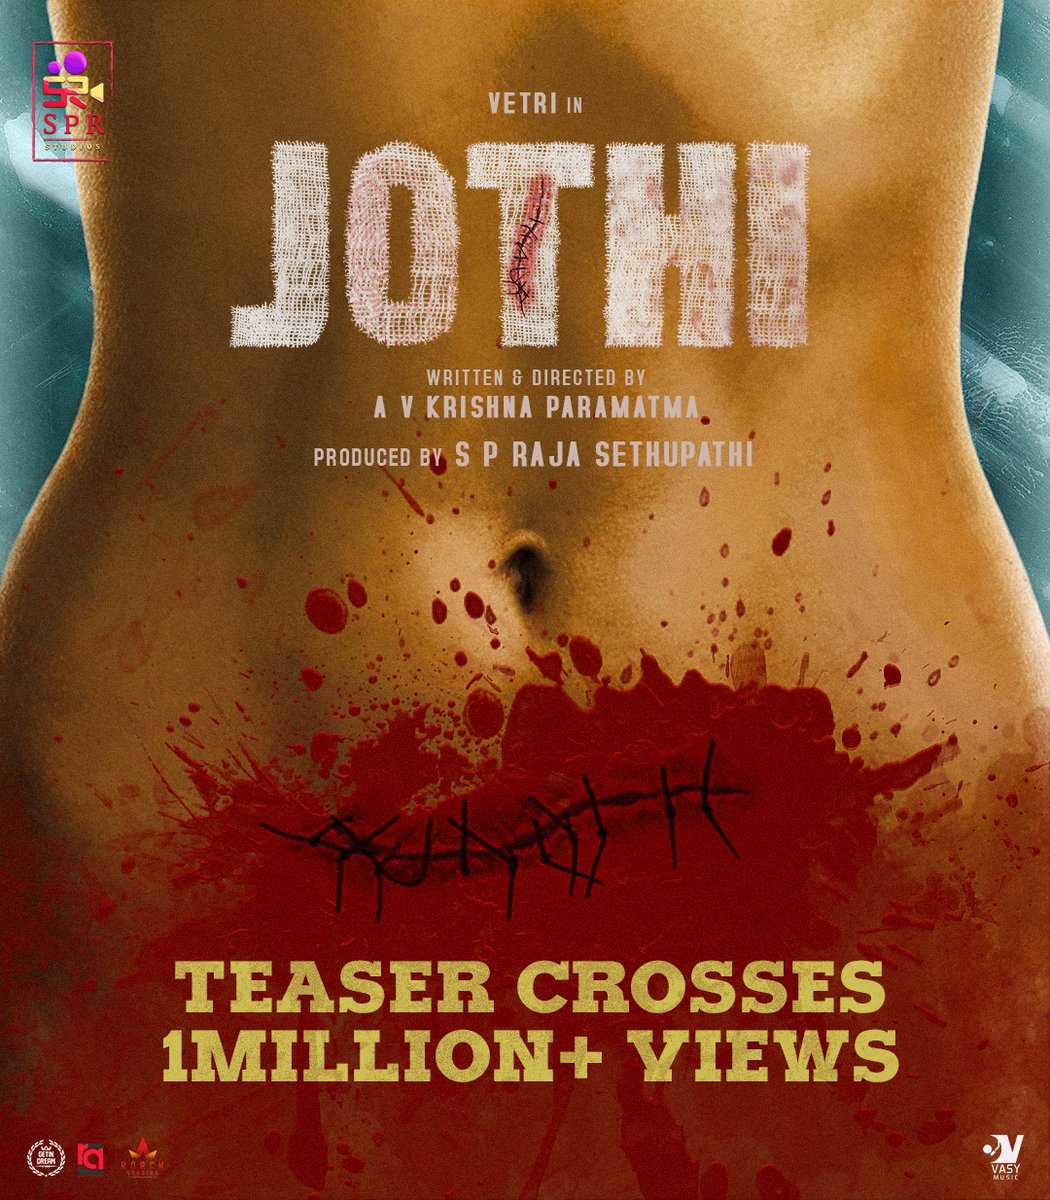 With immense response from public the Teaser of #Jothi Attained 1M+ Views on YouTube ! ICYMI : youtu.be/DHFfDN7FSkM @act_vetri @SPRSethupathi @spr_studios @dir_avkparamtma @rameemusic @KurupKrisha @sheelaActress @bedremona @Pujithadevaraju #CineemaJunction